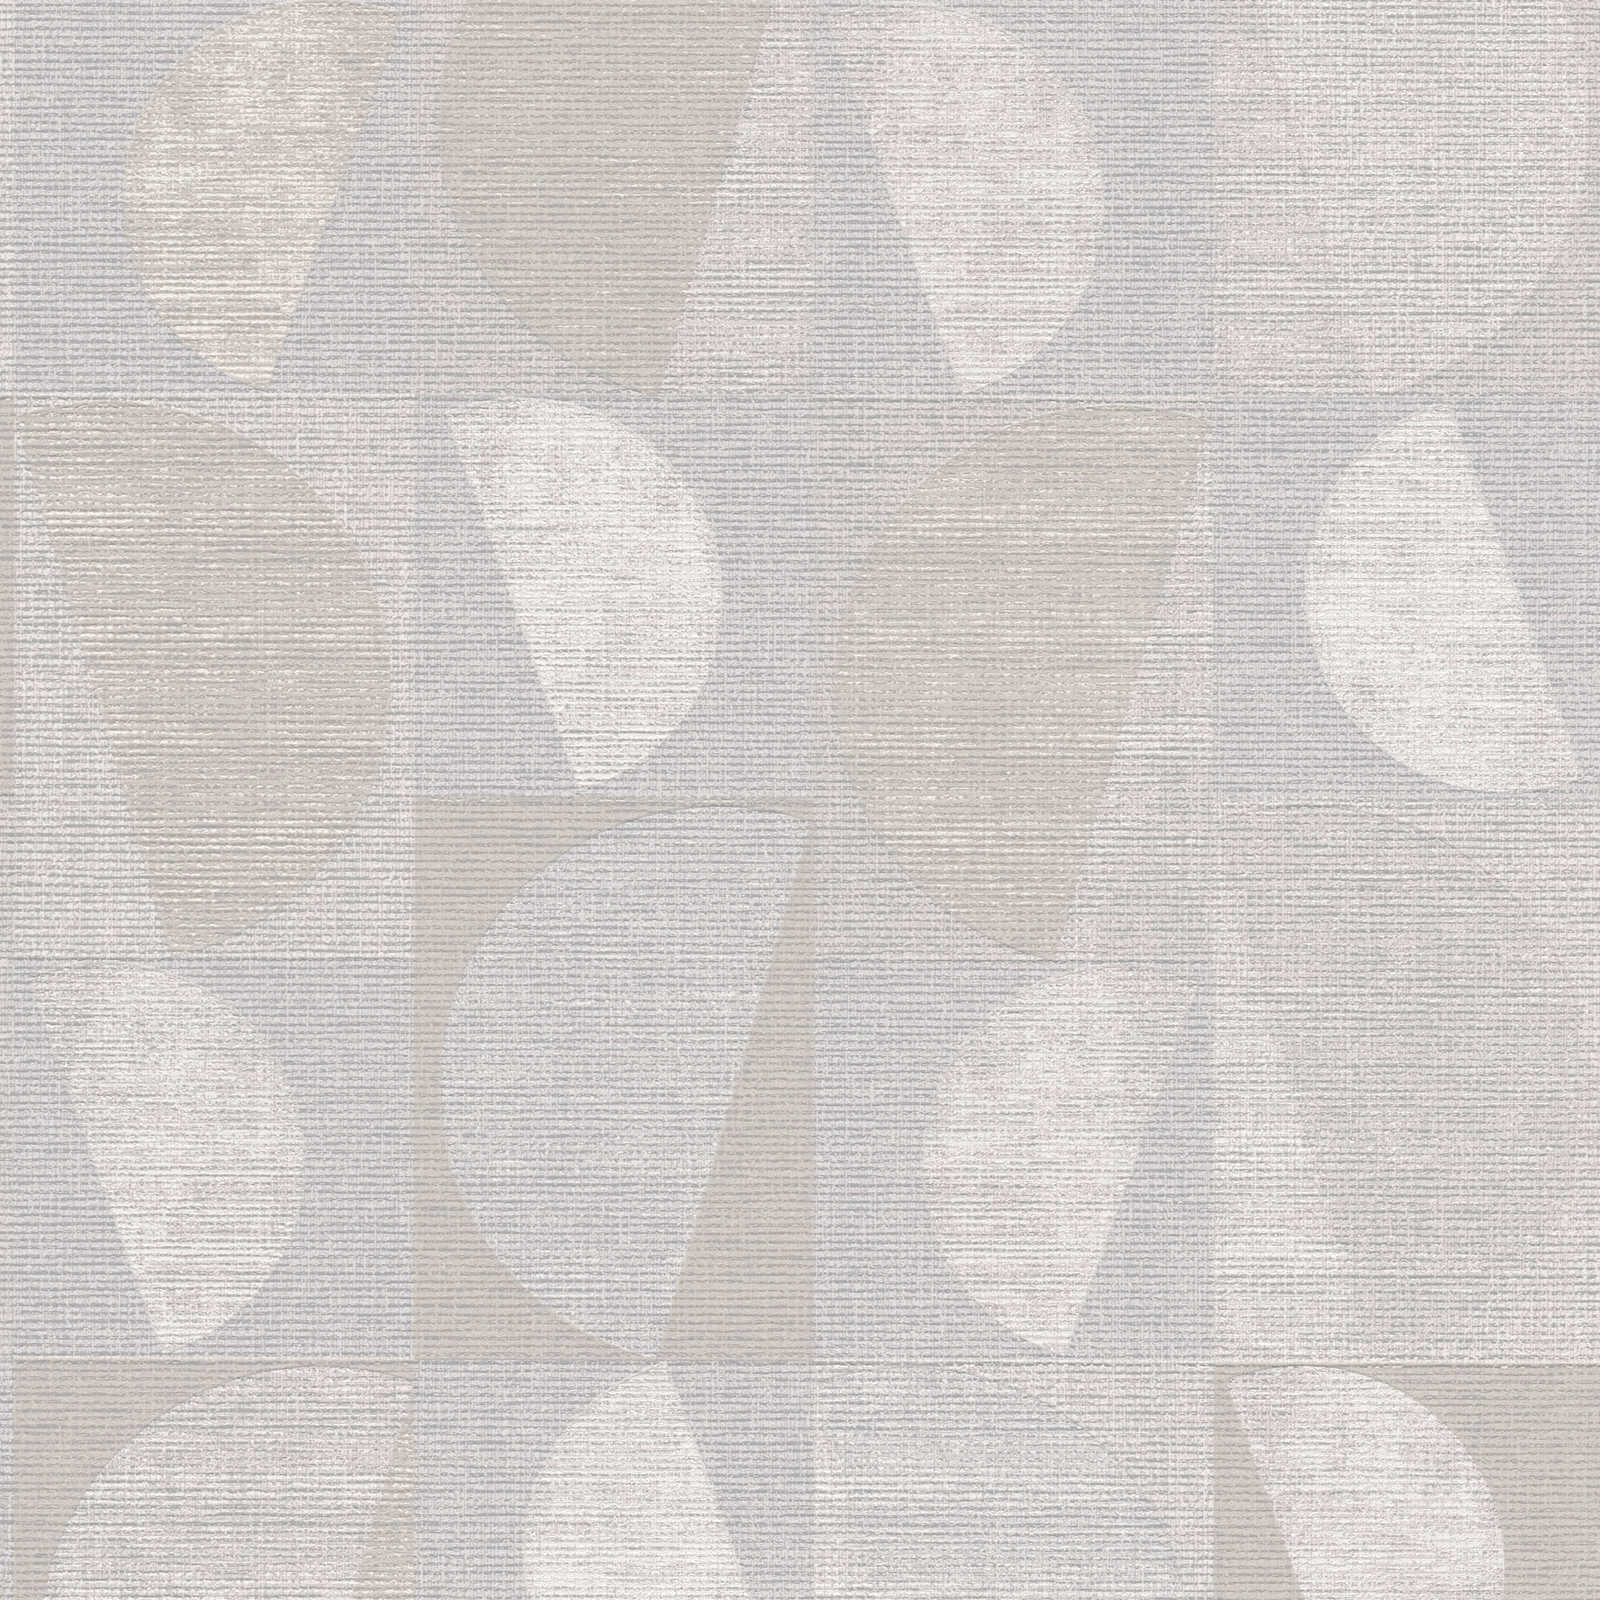         70er Retro Tapete Grafik-Muster & Textildesign – Beige, Grau, Creme
    